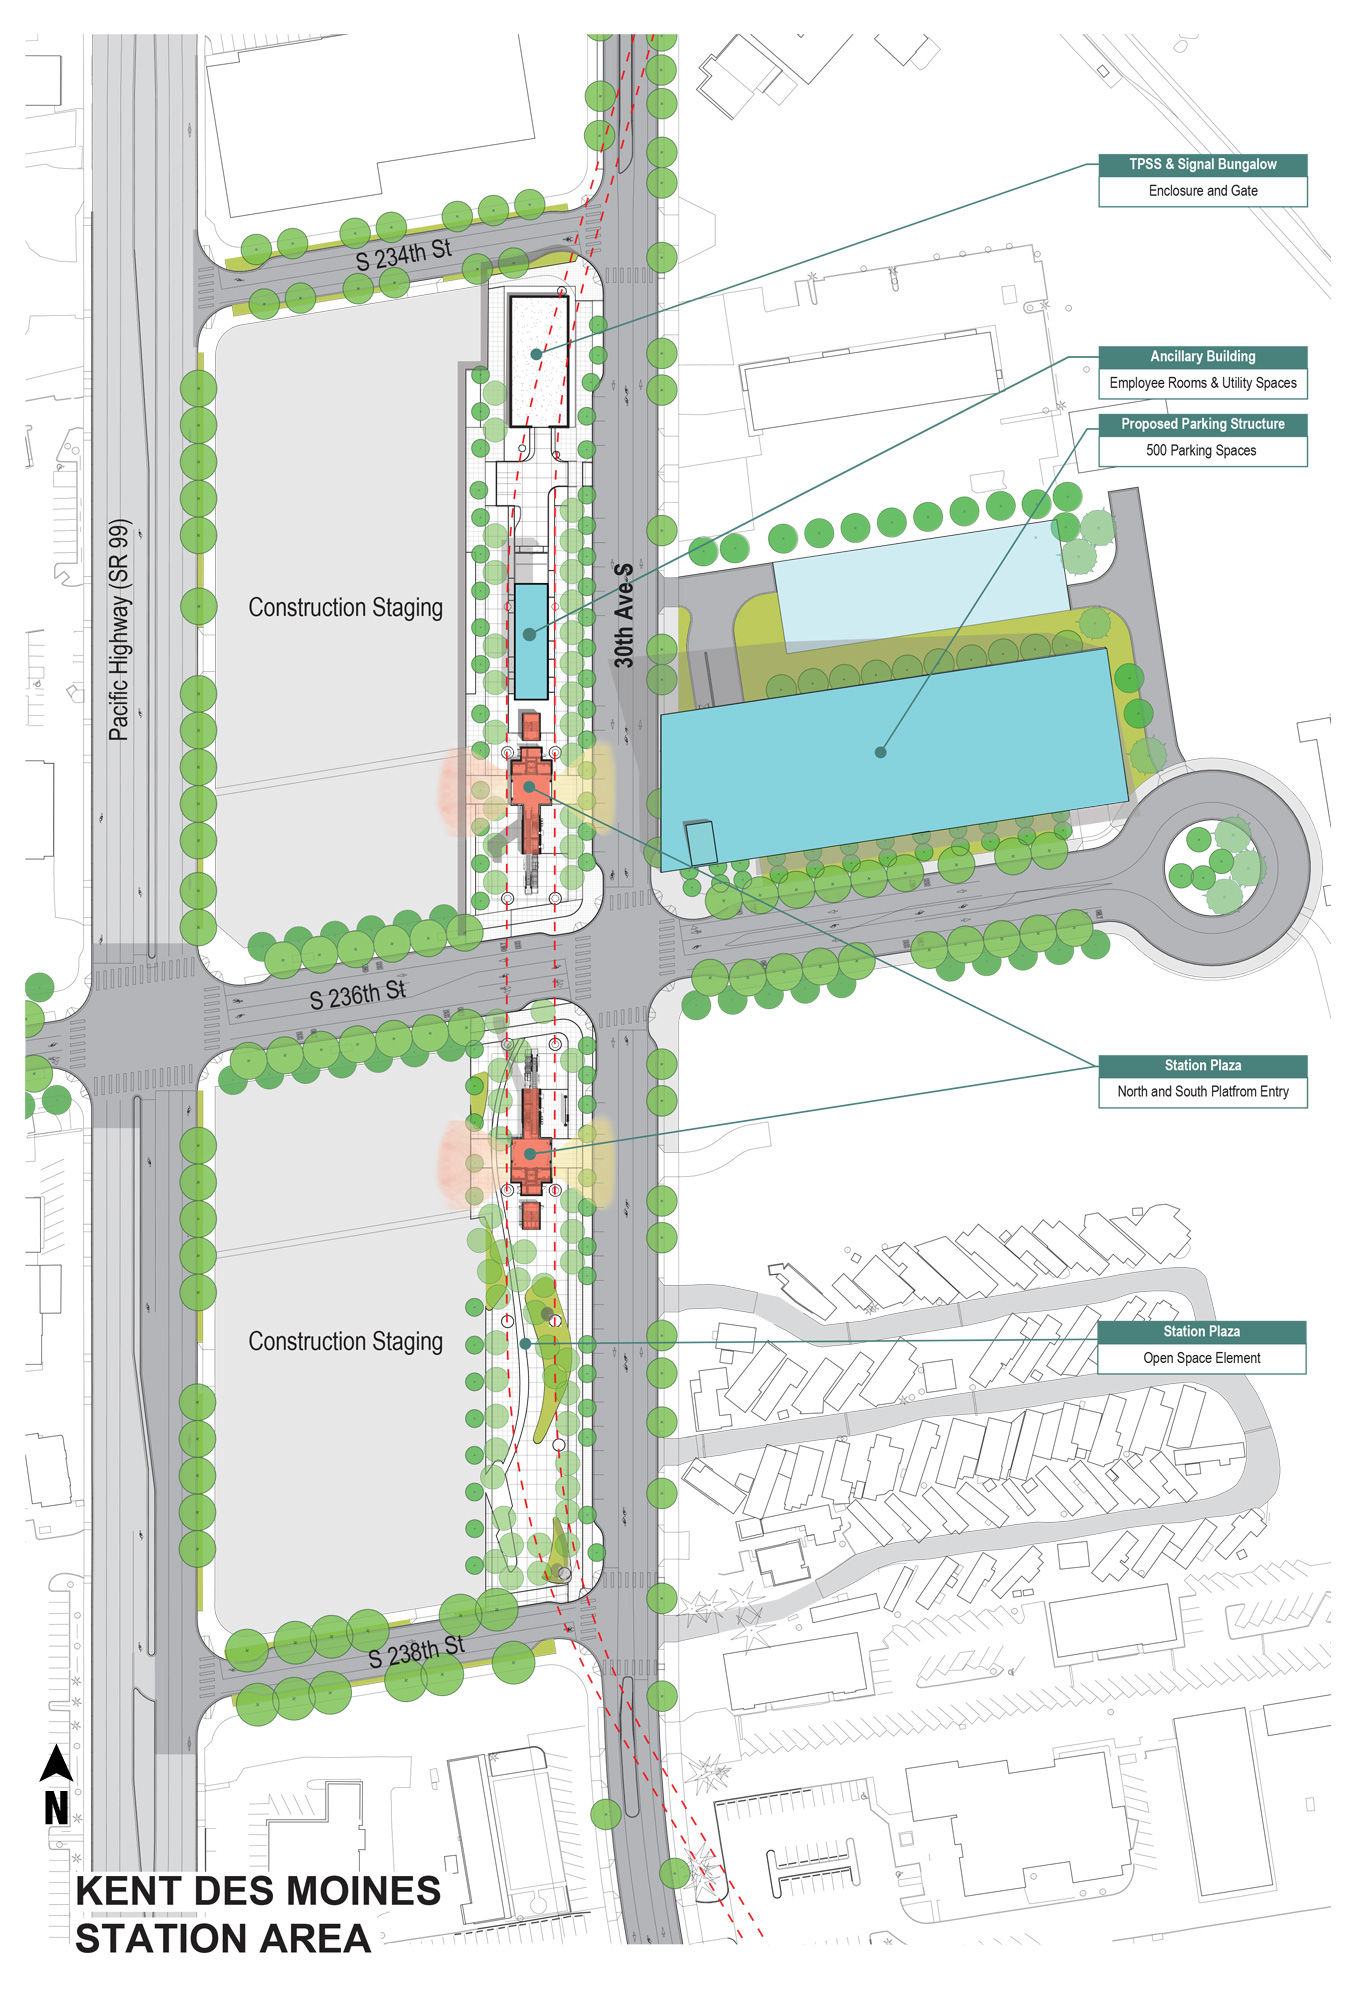 Kent Des Moines site plan showing station, parking garage, and construction area.